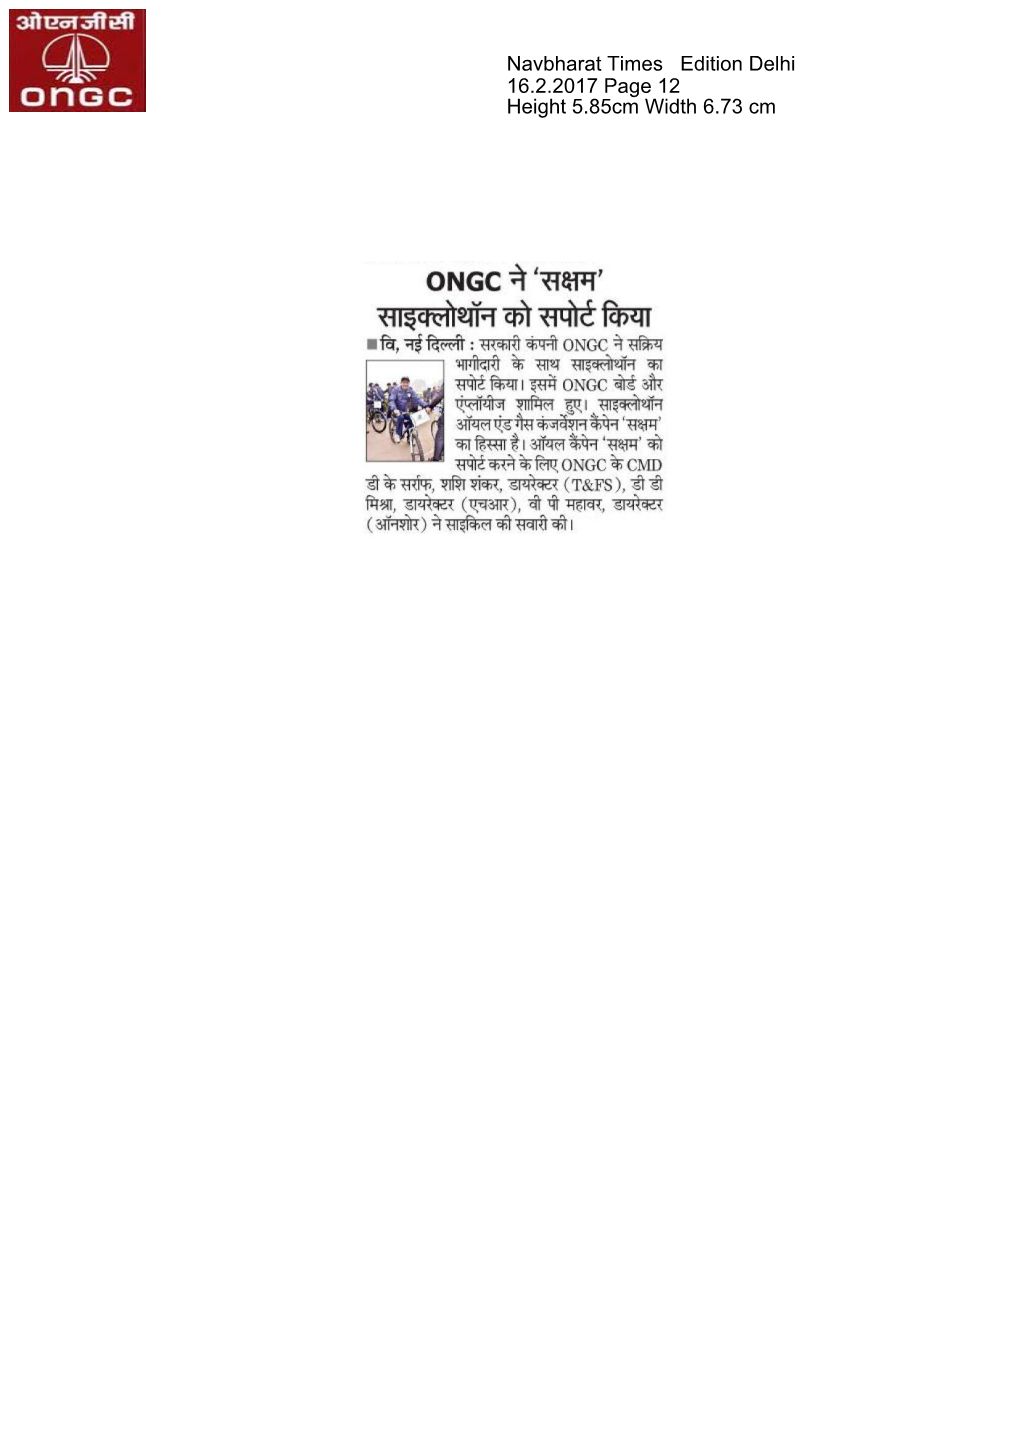 Navbharat Times Edition Delhi 16.2.2017 Page 12 Height 5.85Cm